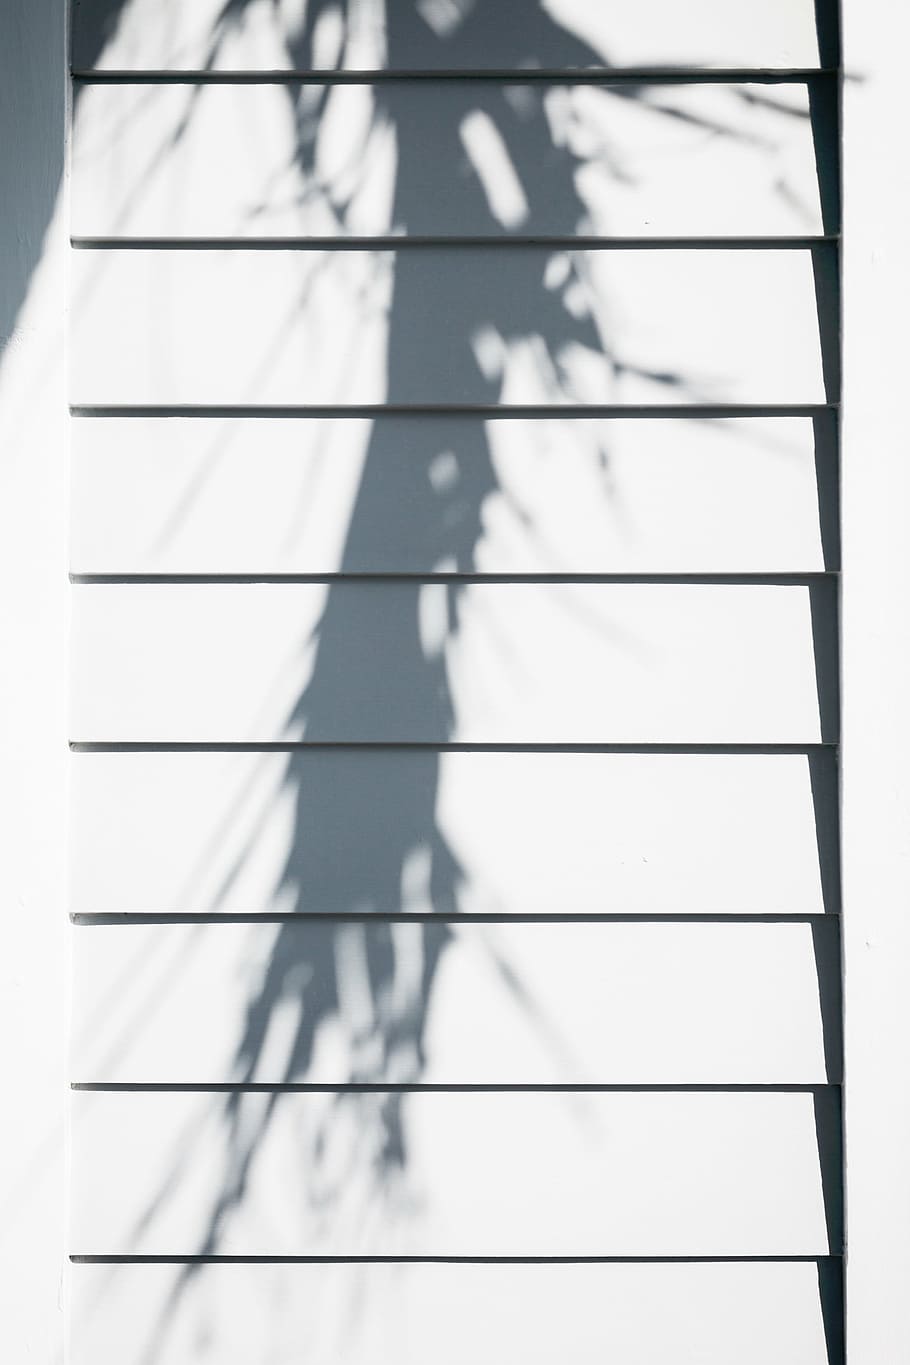 sombra en las escaleras, ventana, madera, blanco, sombra, casa, hogar, día, luz solar, estructura construida